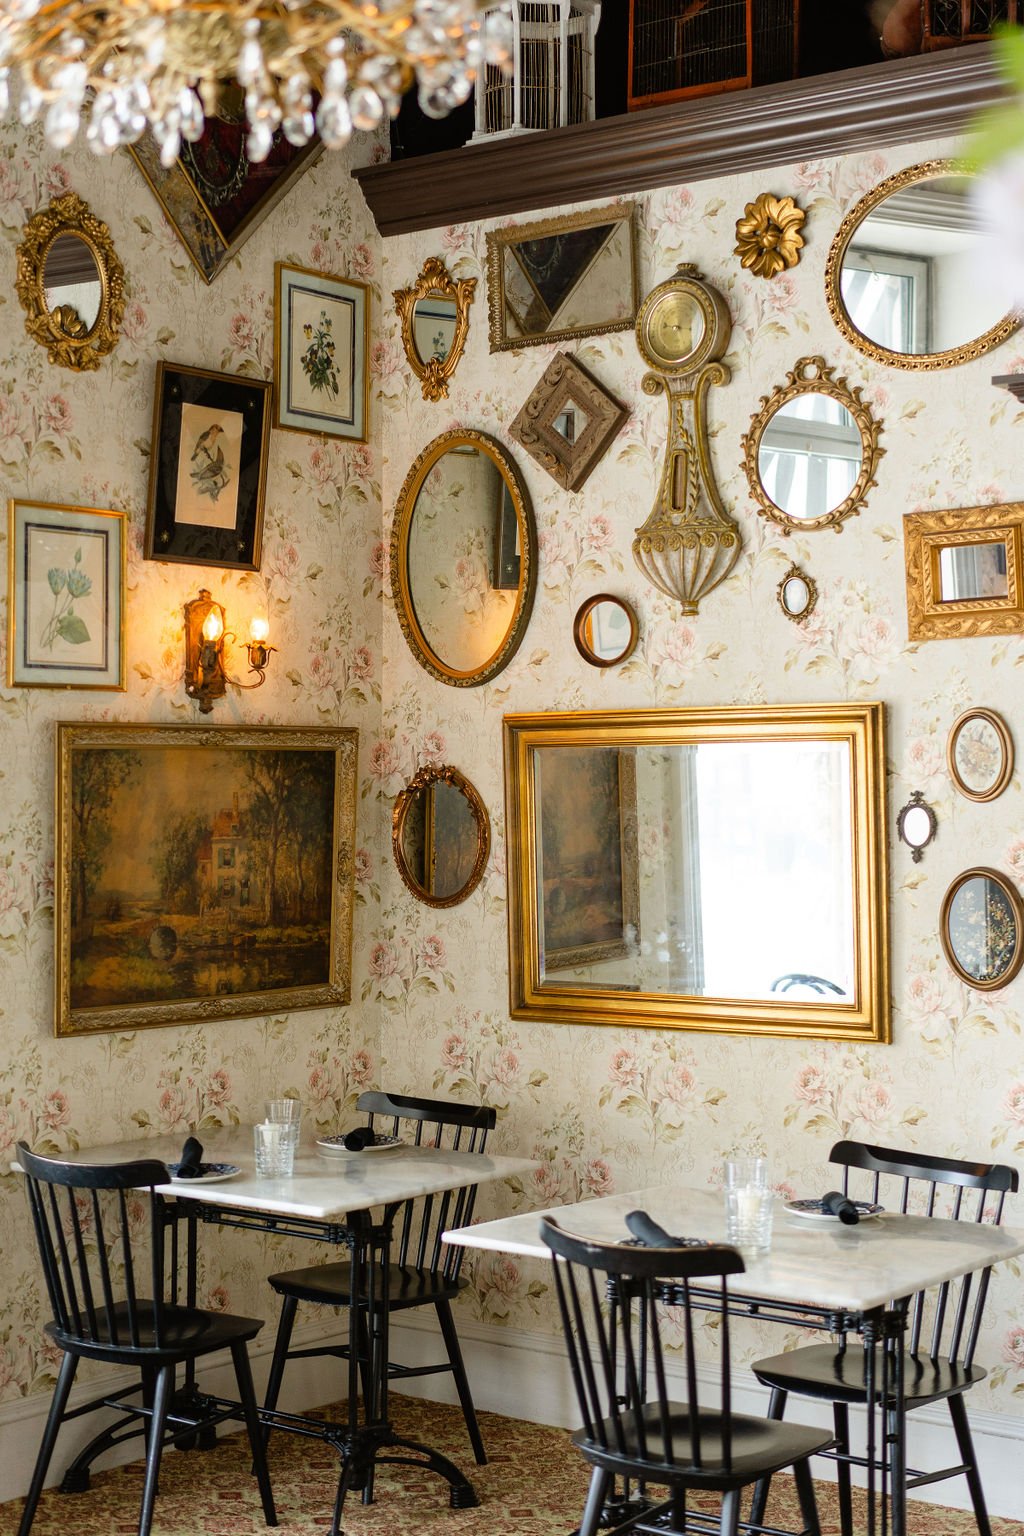 Black Swan Tea Room Image with Mirrors.jpg